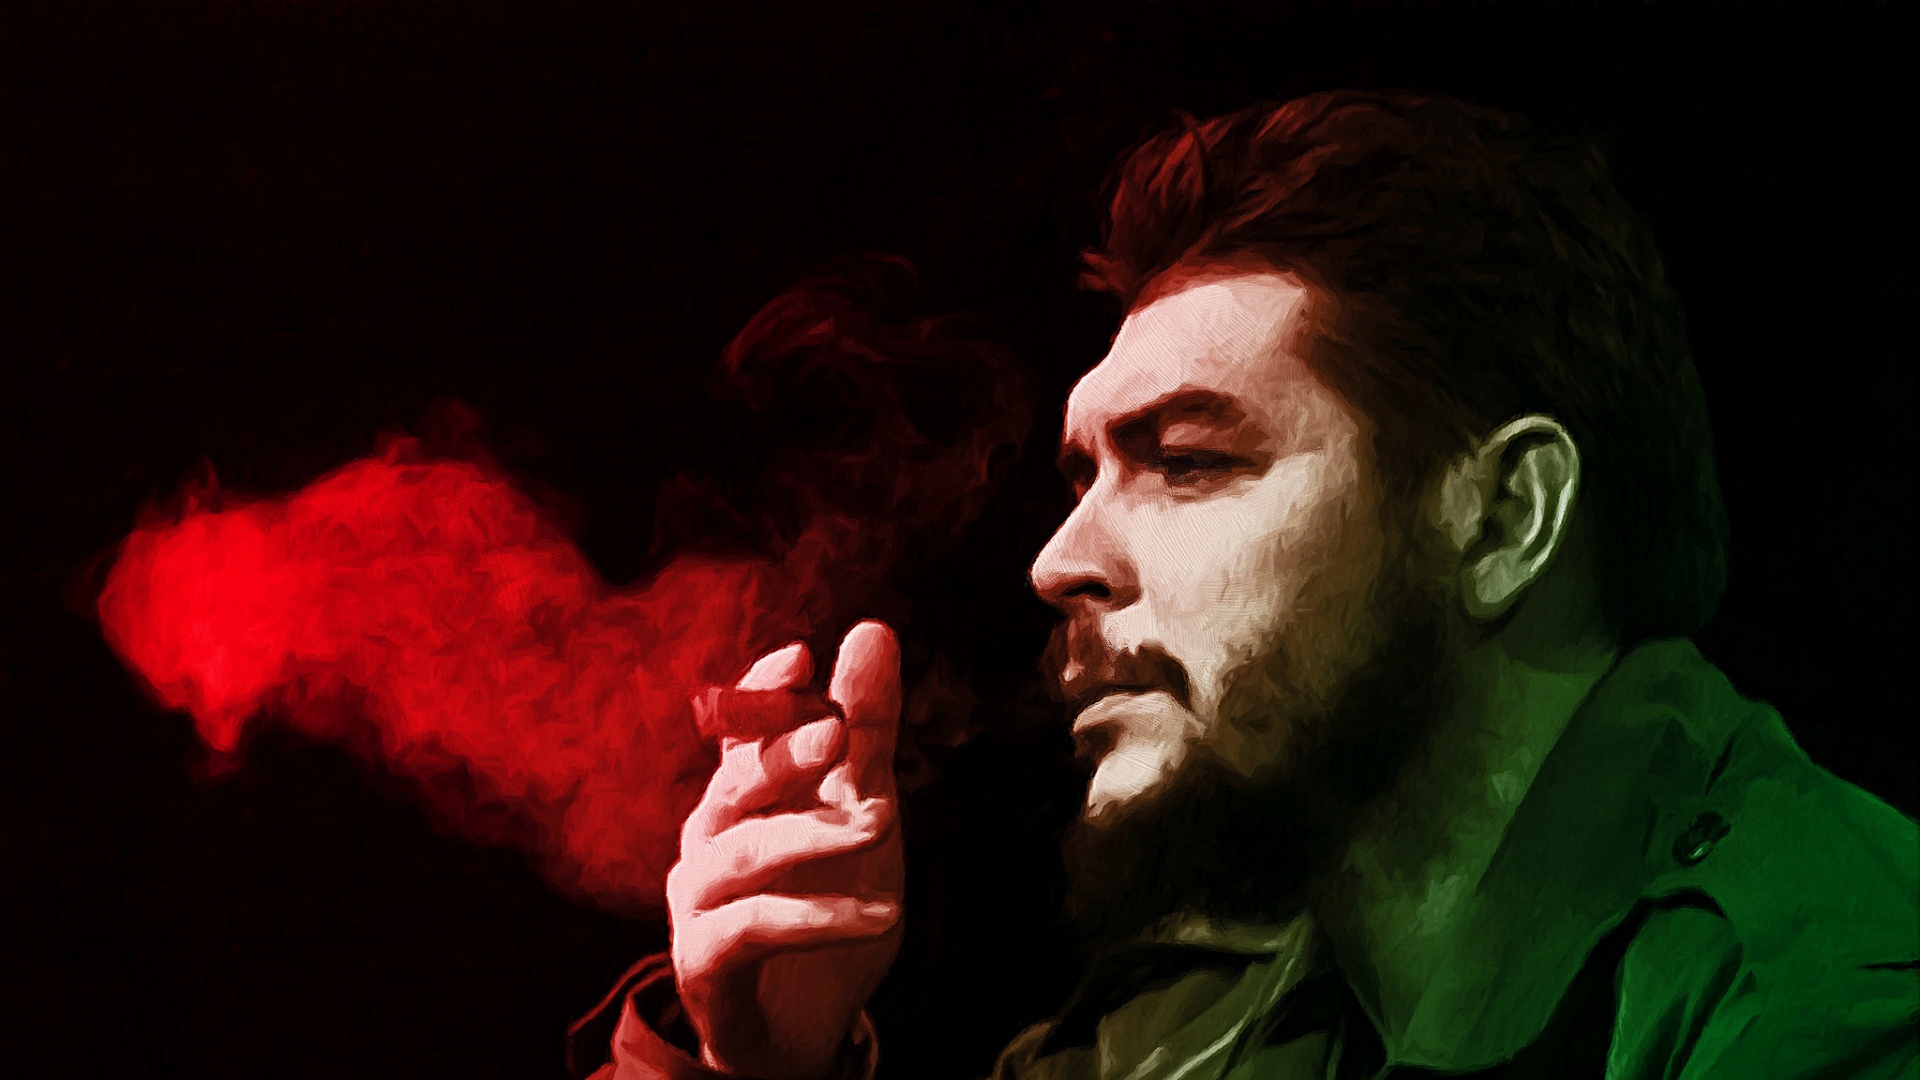 Gallery For Gt Che Guevara Smoking Wallpaper